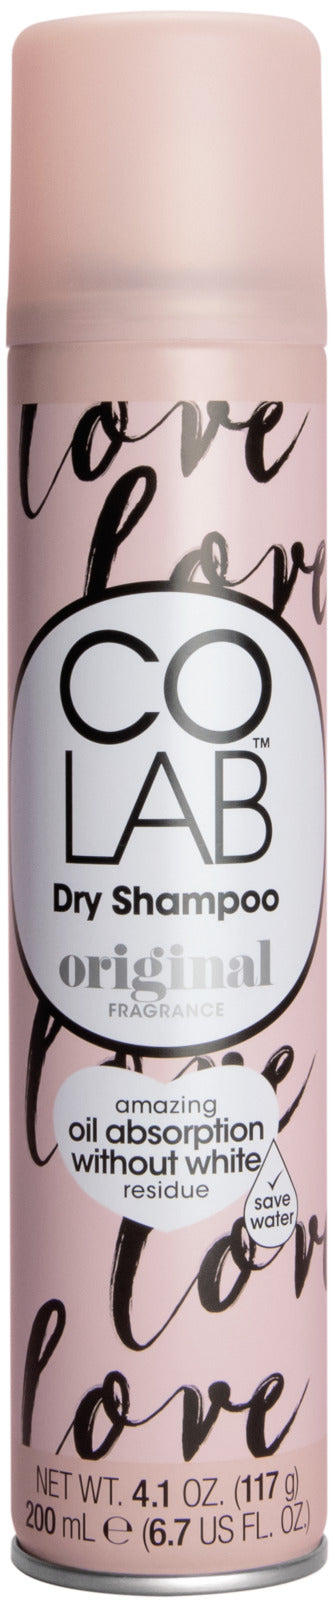 Co Lab: Dry Shampoo - Original (200ml)